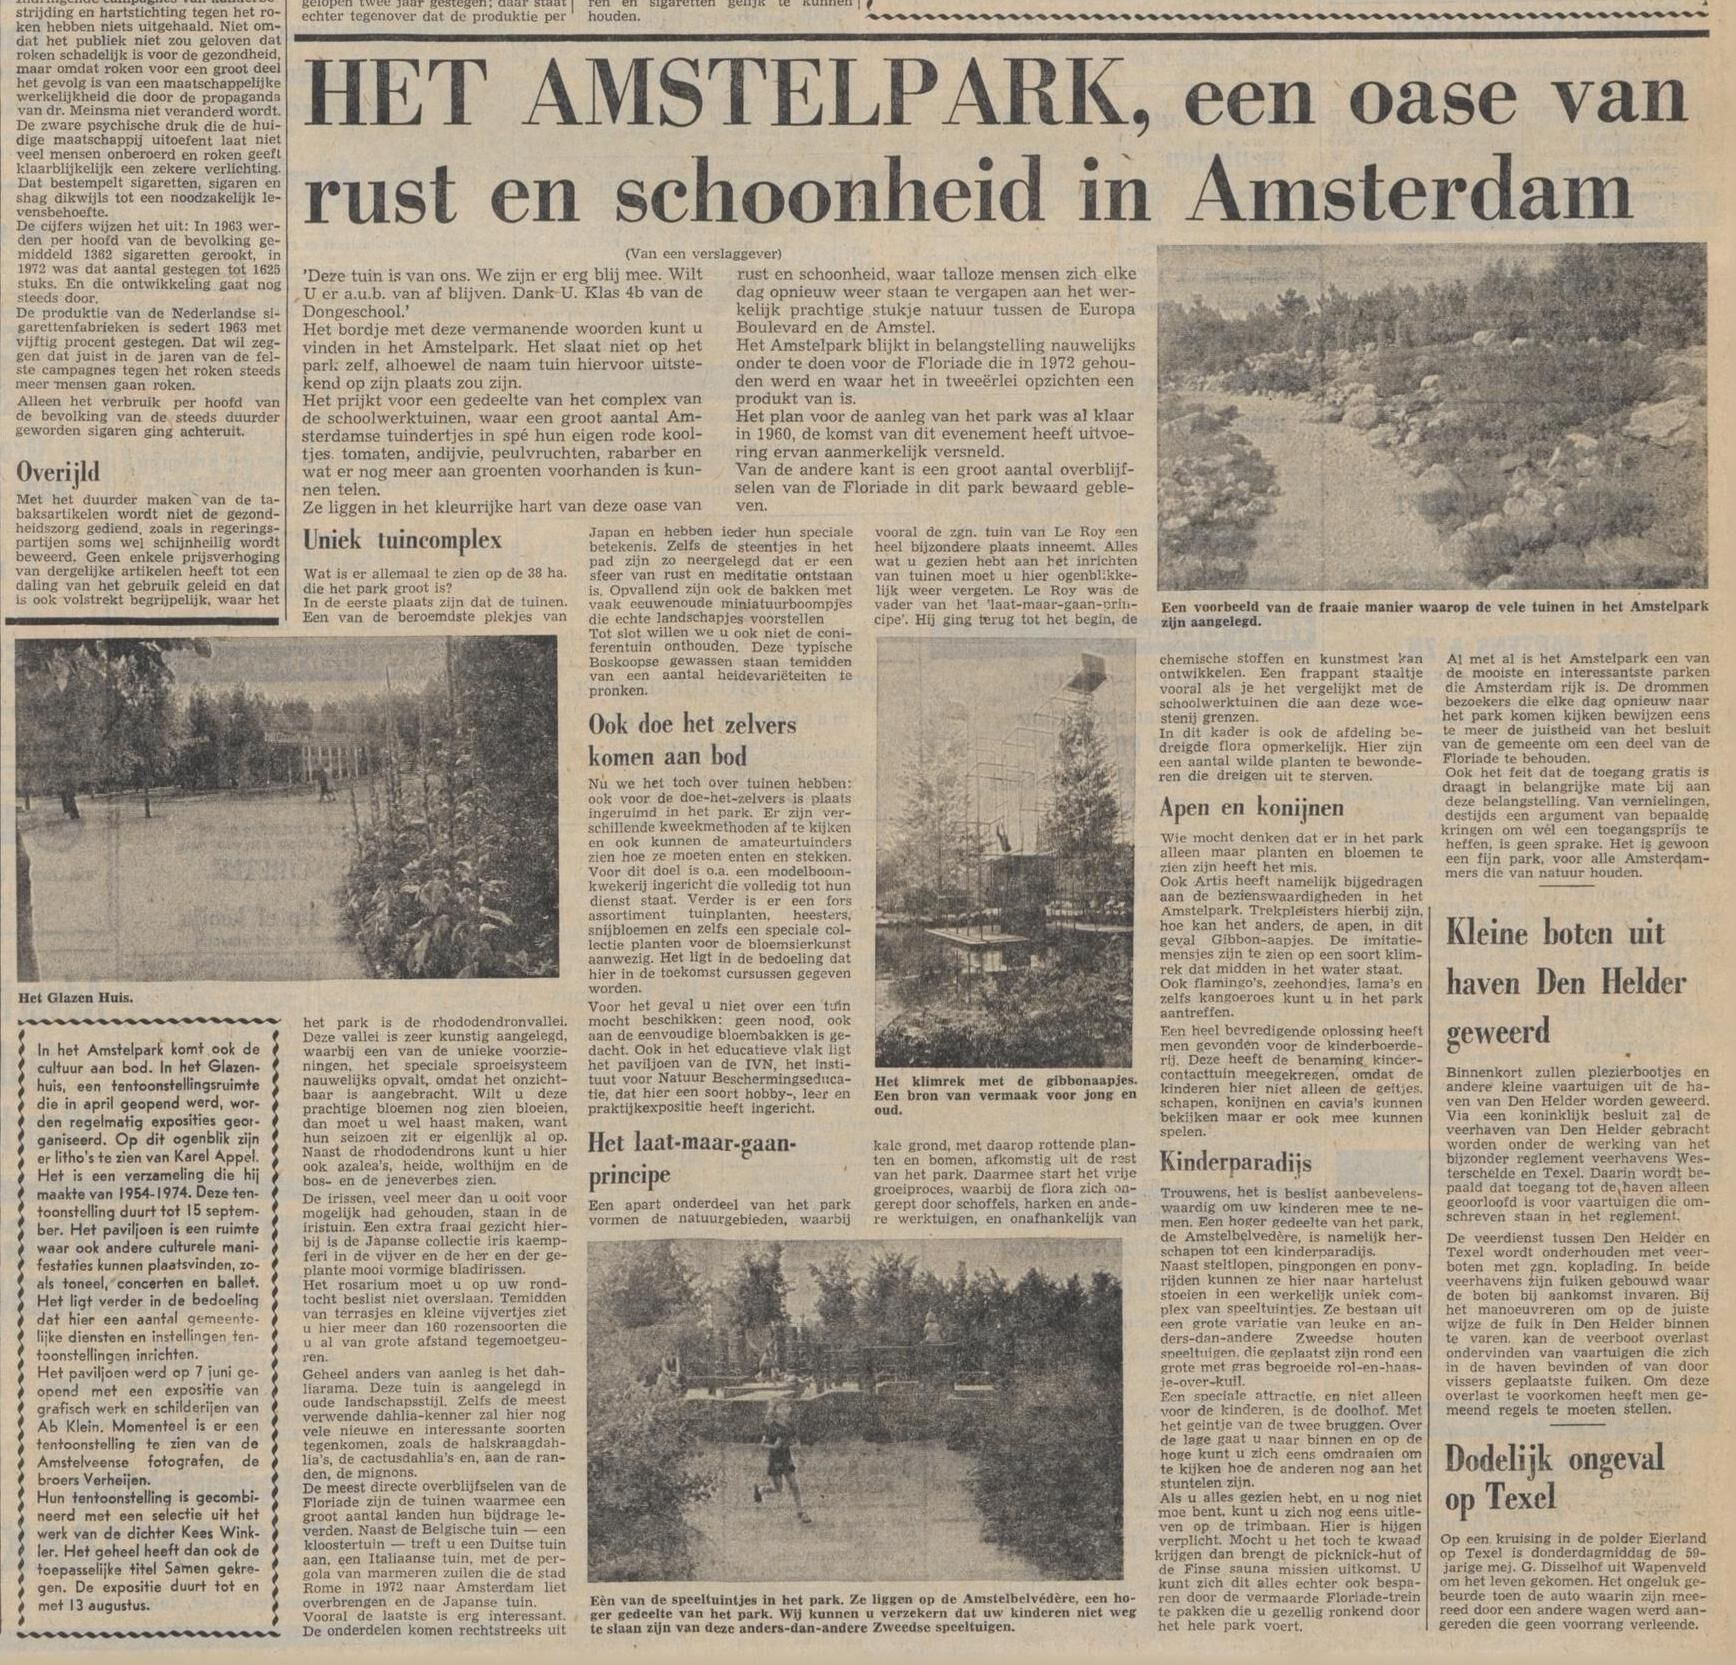 19740726Het_Amstelpark_een_oase_van_rust_en_schoonheid_in_Amsterdam.jpg